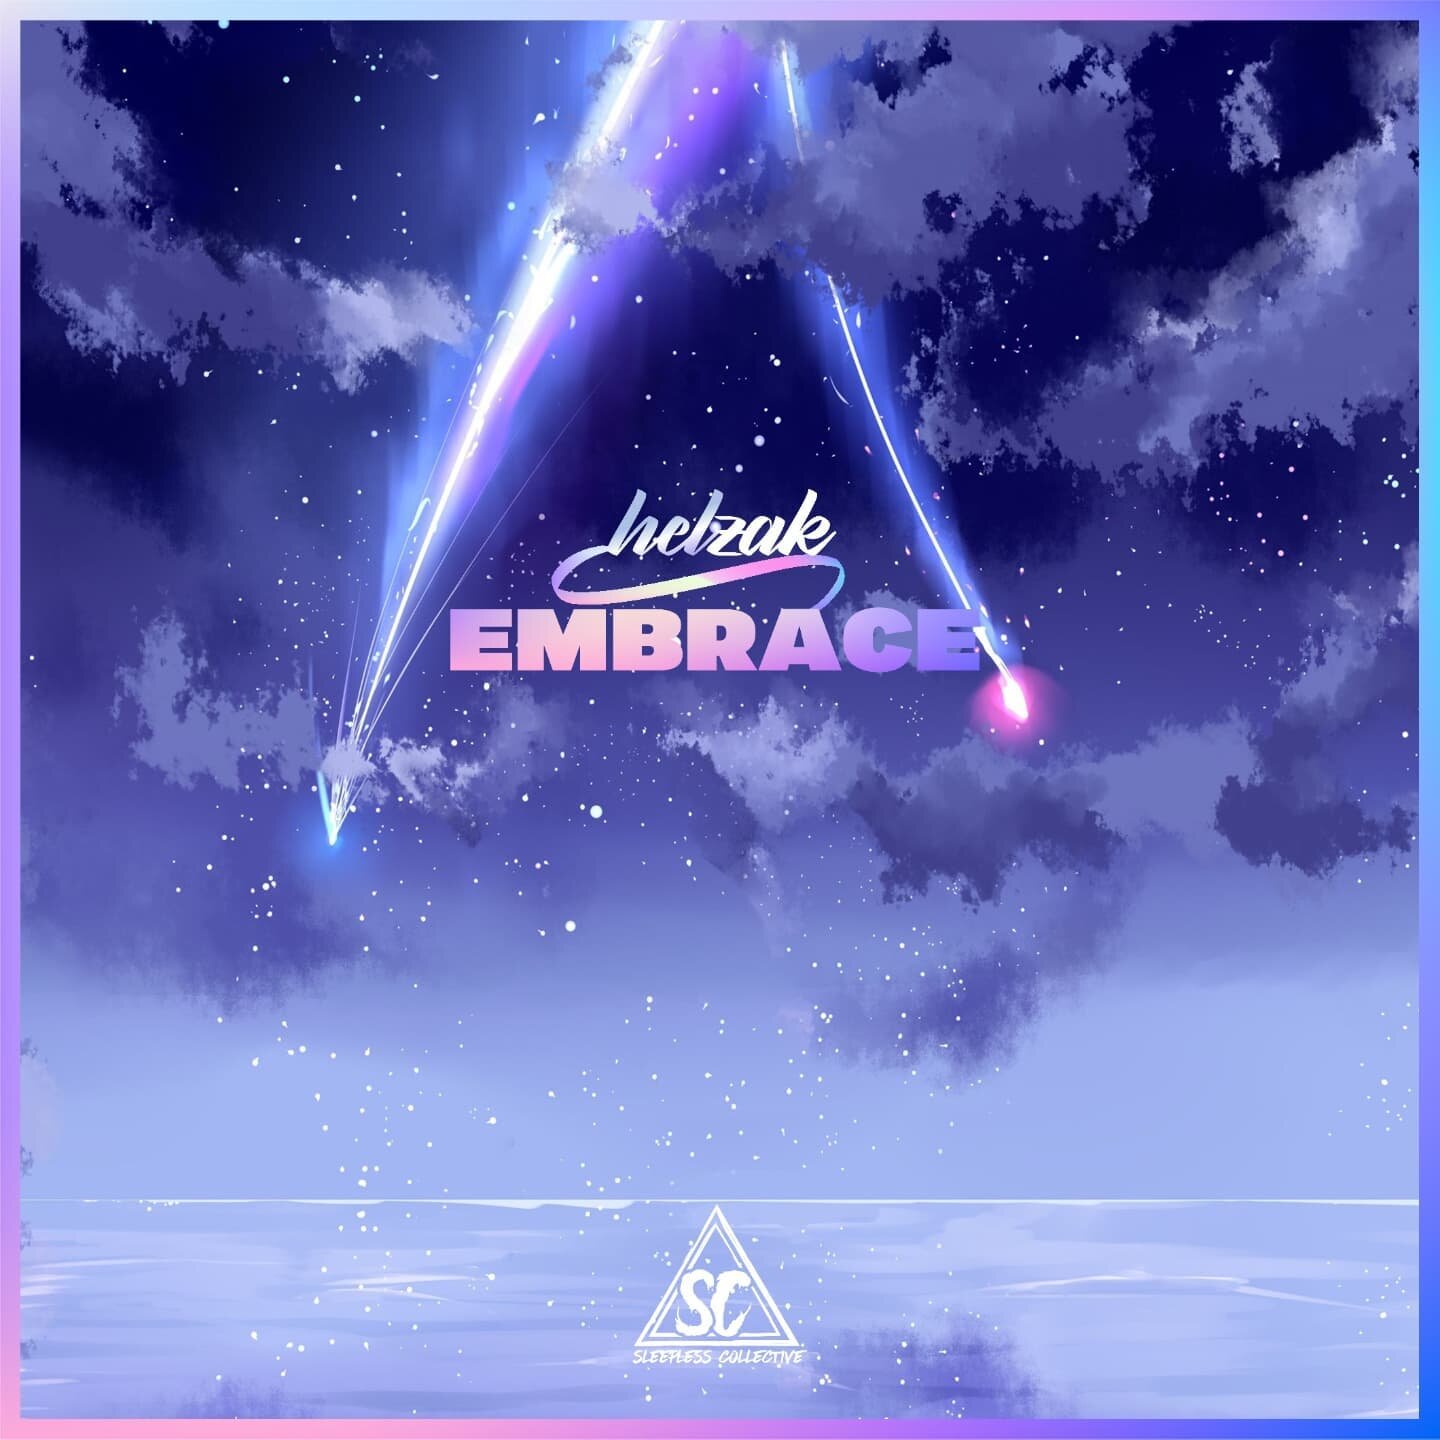 Helzak - Embrace
Released the 14th January 2022
@helzak_music